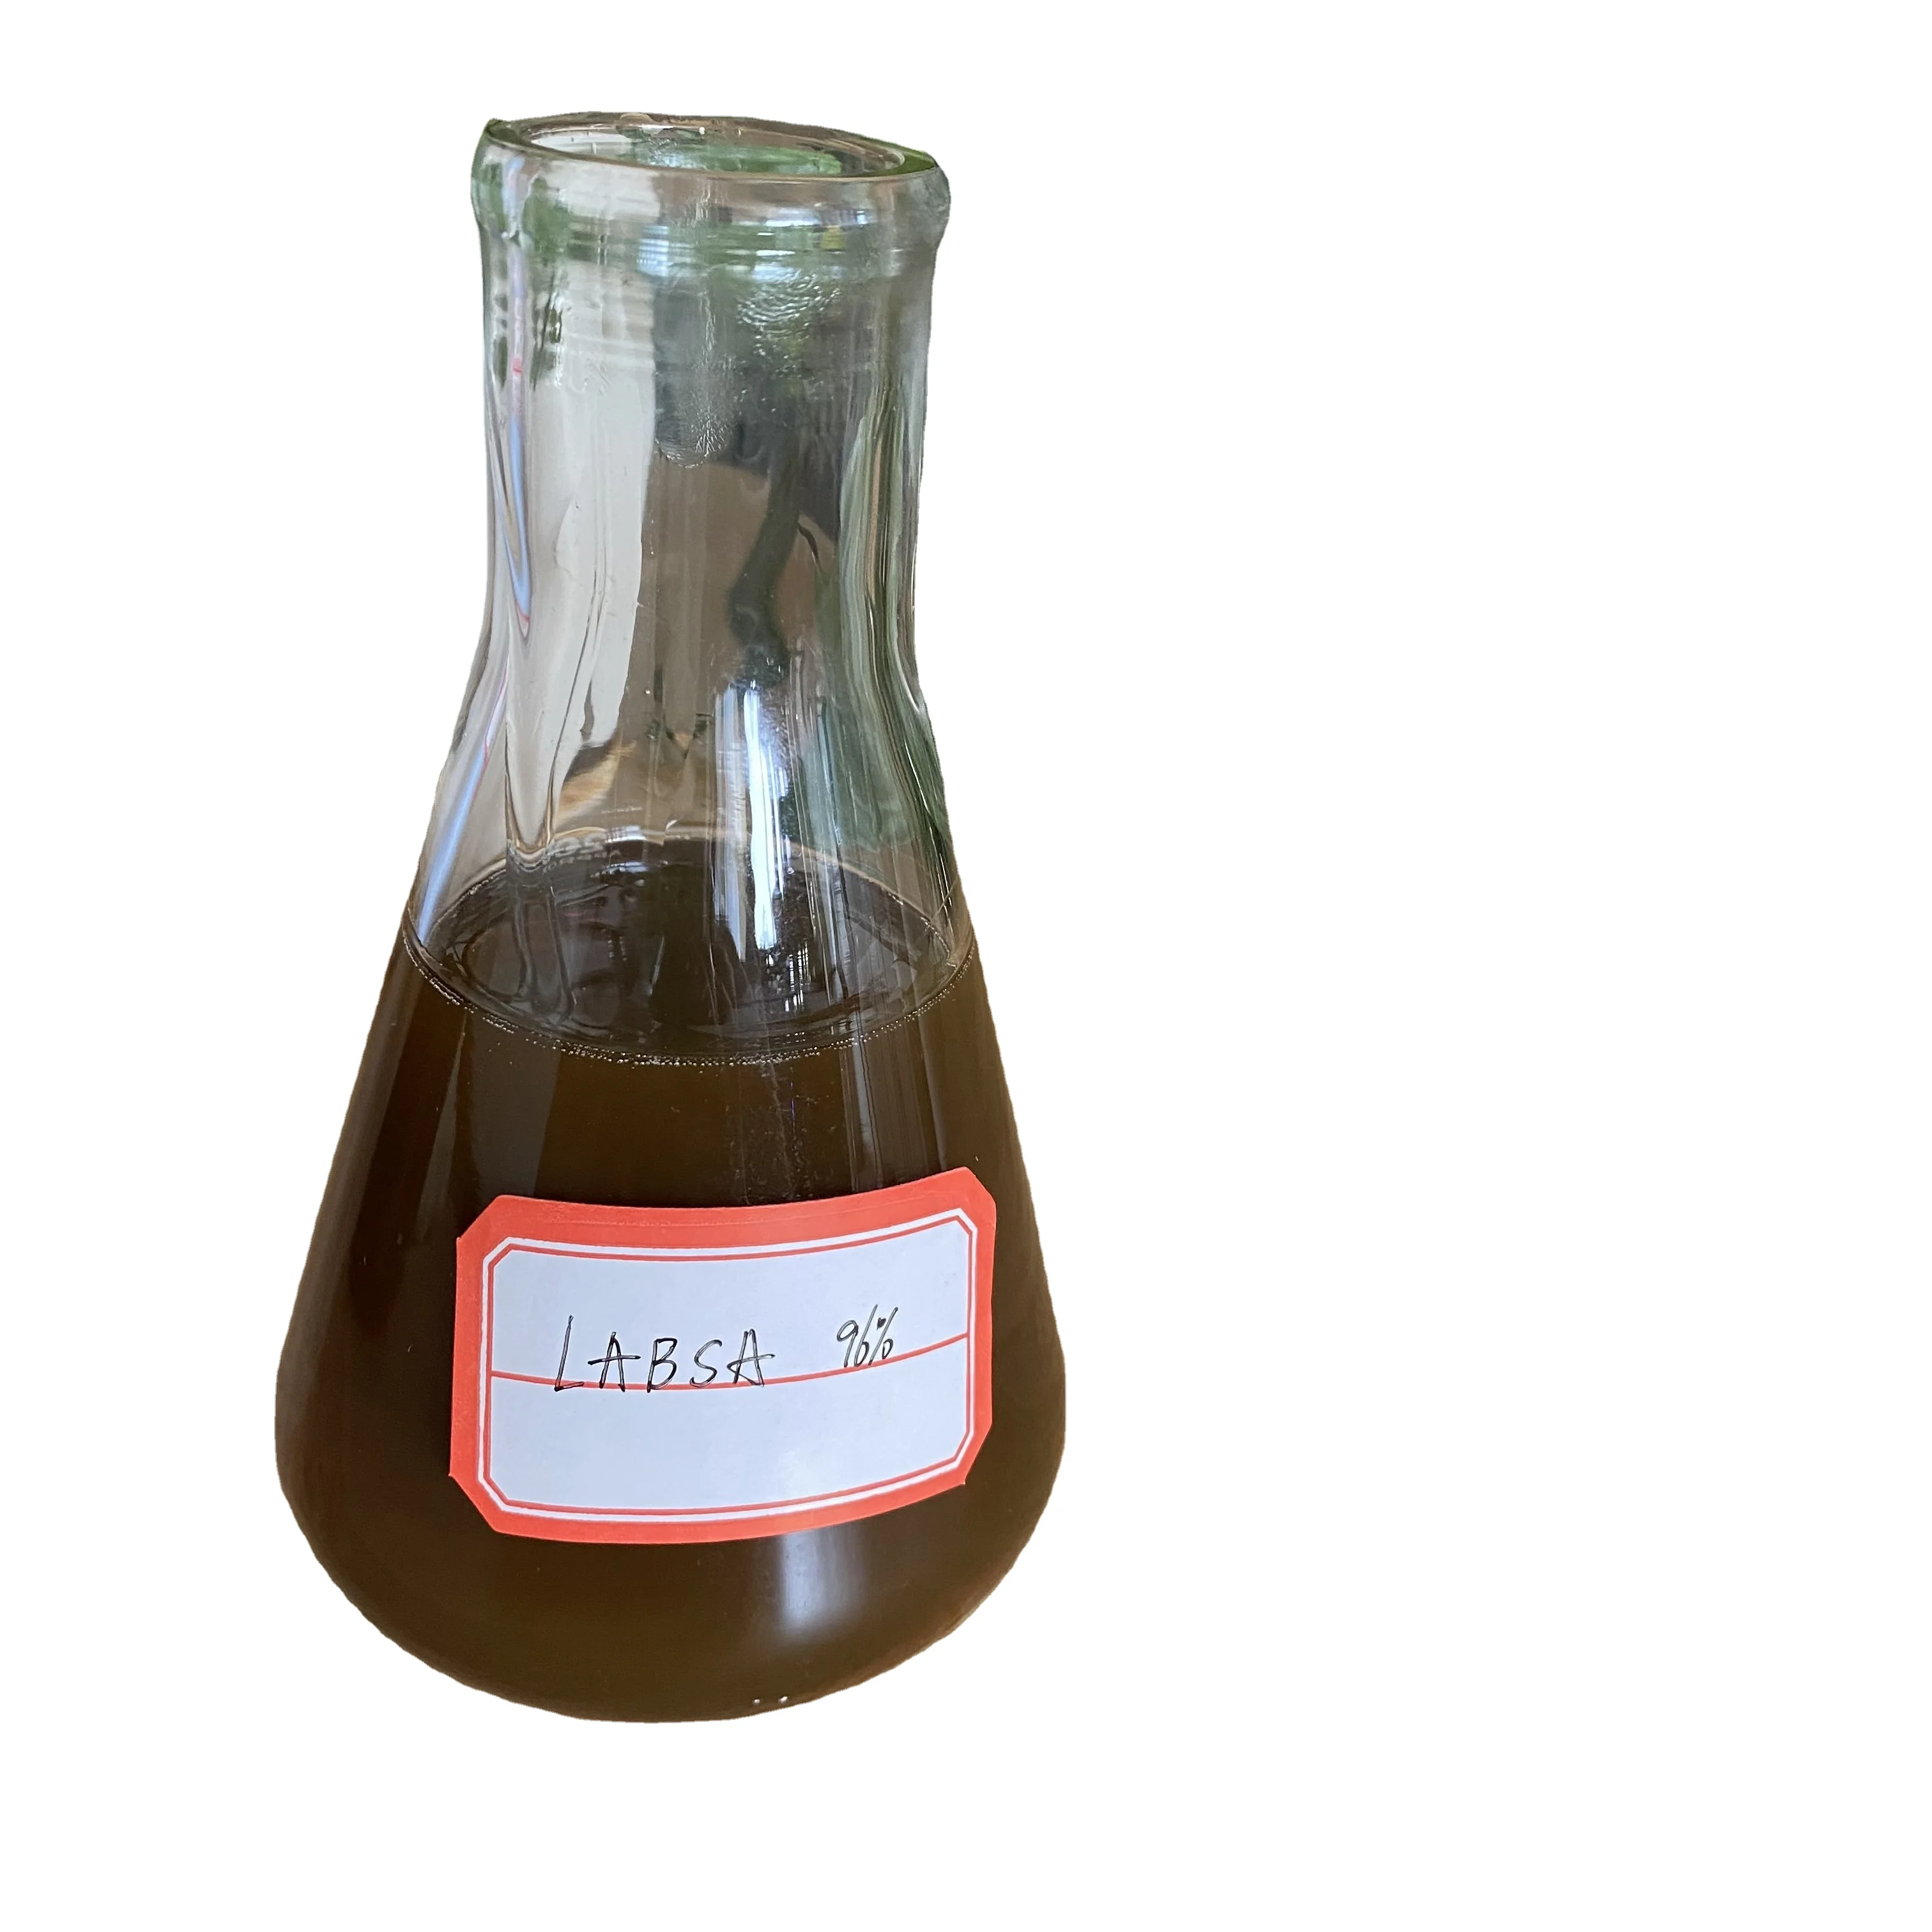 sulphonic acid india 96% sulfonic acid dodecyl benzene sulphonic acid LABSA 96 for detergent